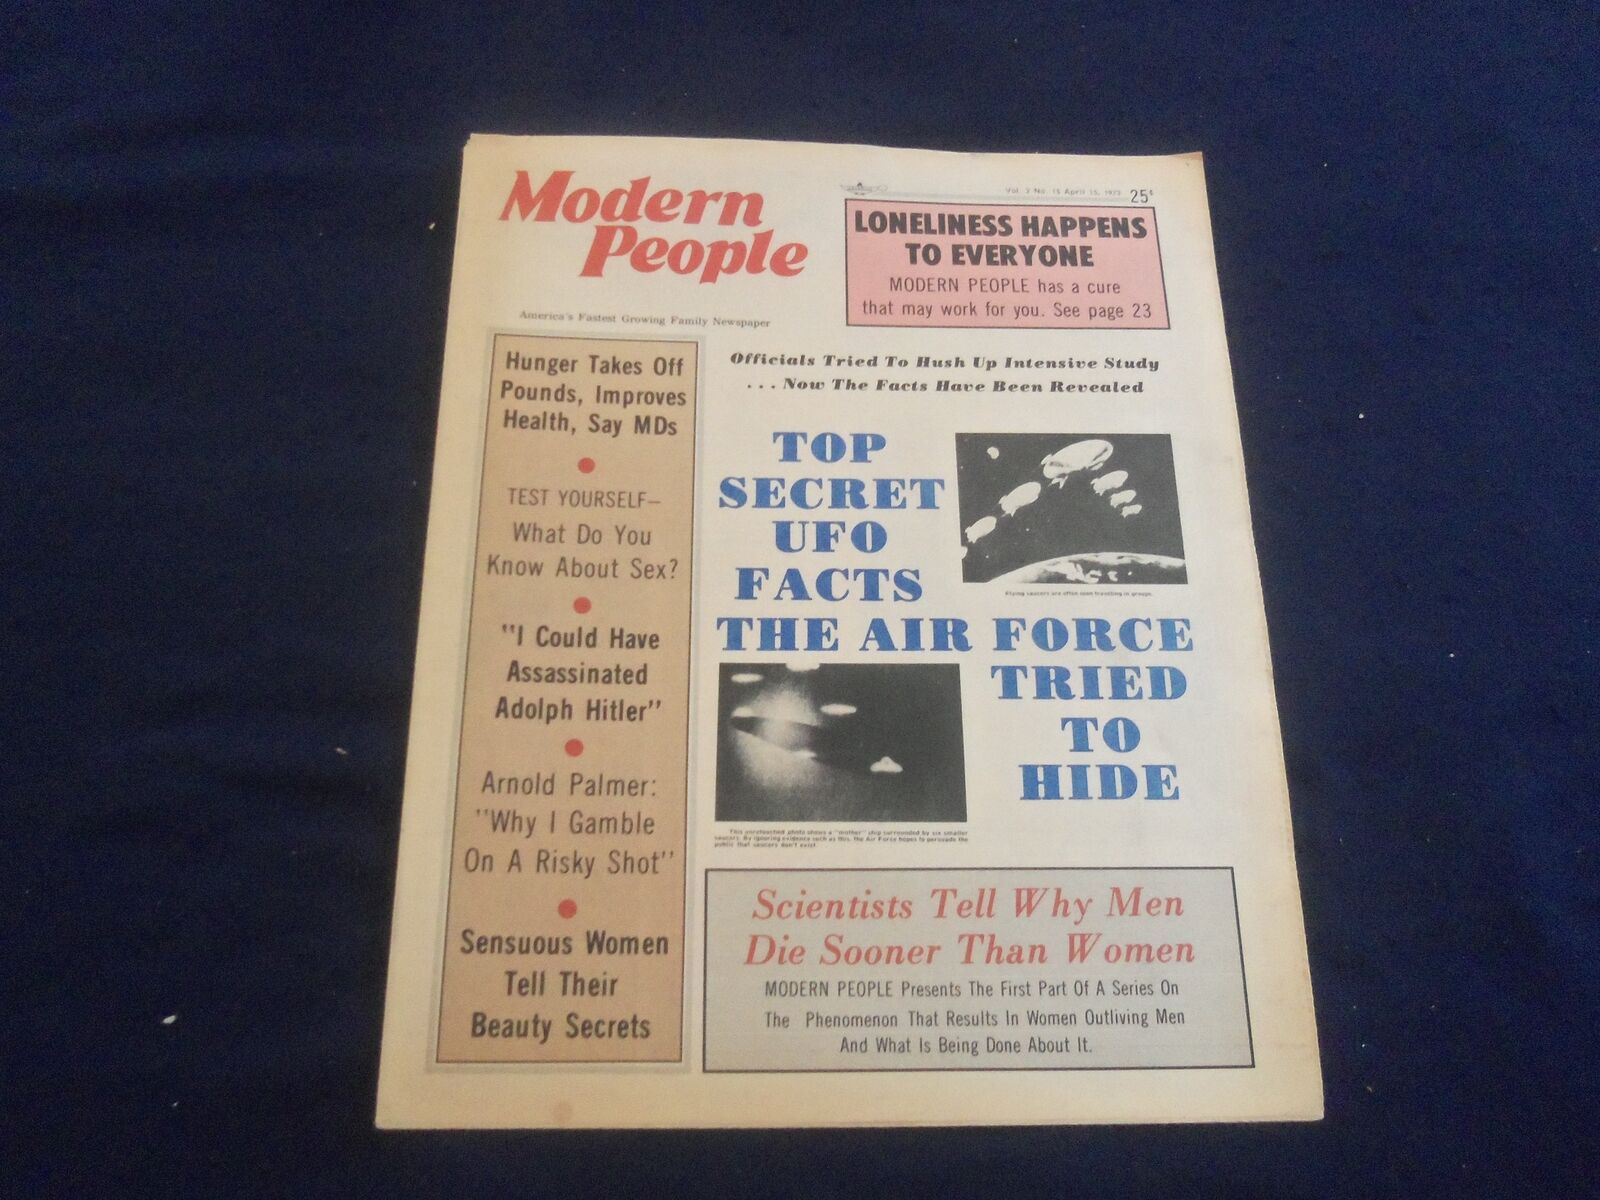 1973 APRIL 15 MODERN PEOPLE NEWSPAPER - TOP SECRET UFO FACTS - NP 5675